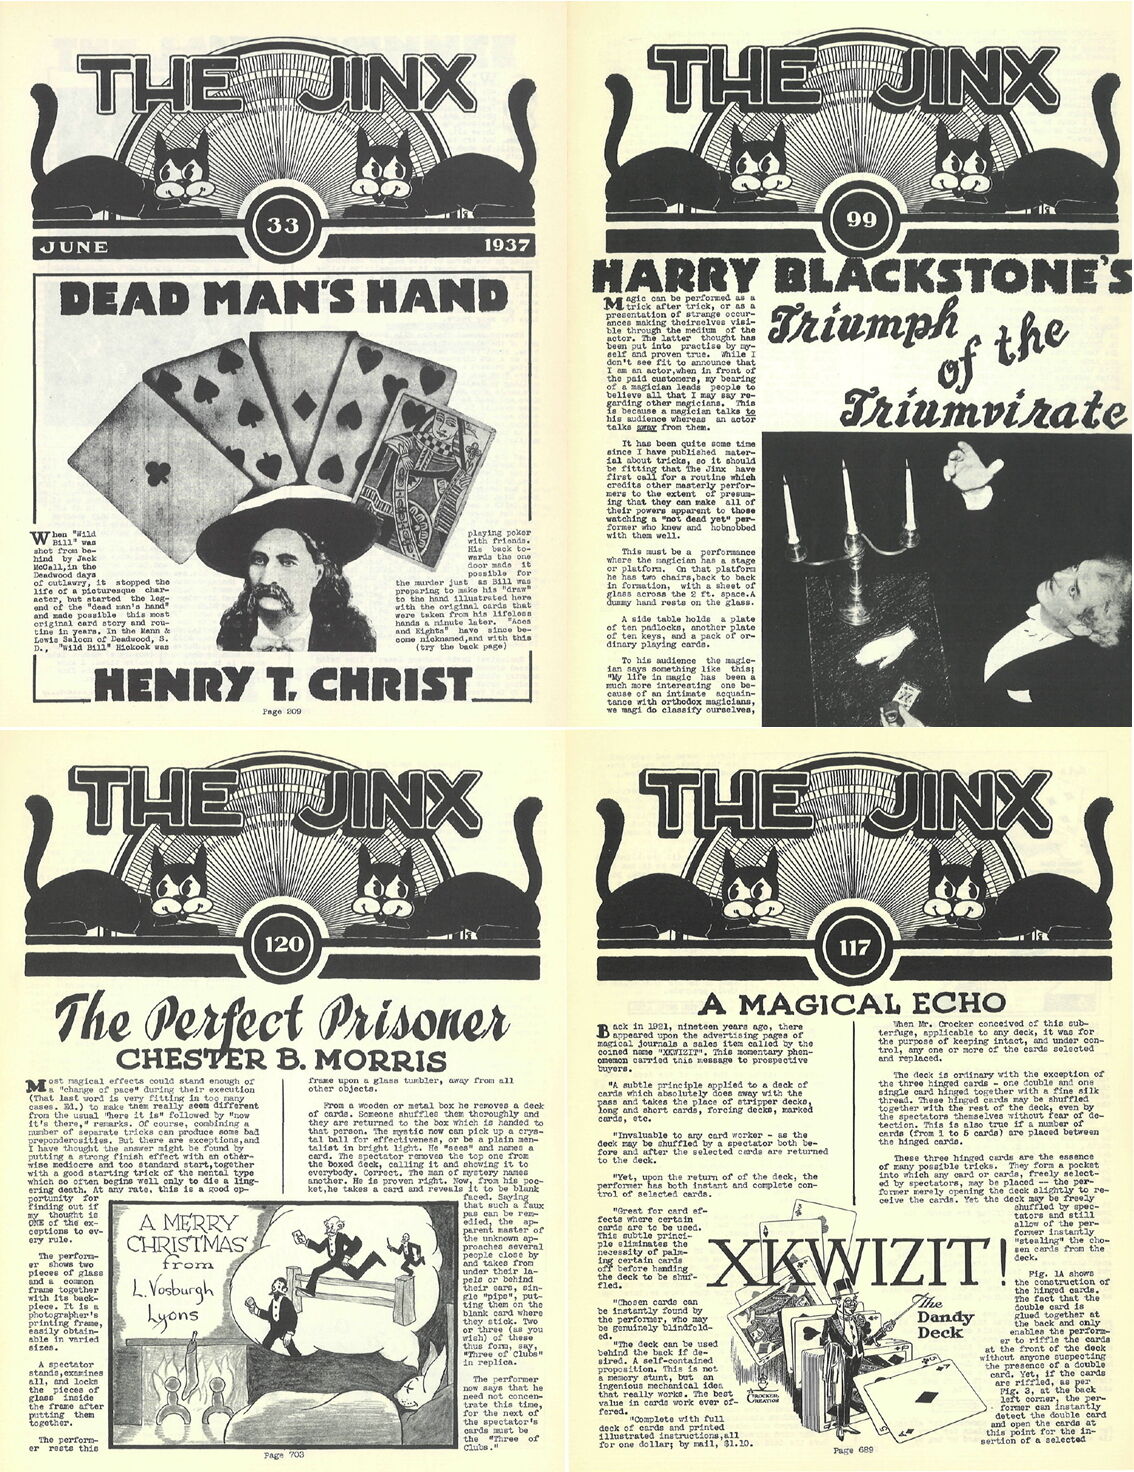 160 RARE ISSUES Of THE JINX - ANNEMANN (1934-1941) MAGIC, CONJURING ON DVD